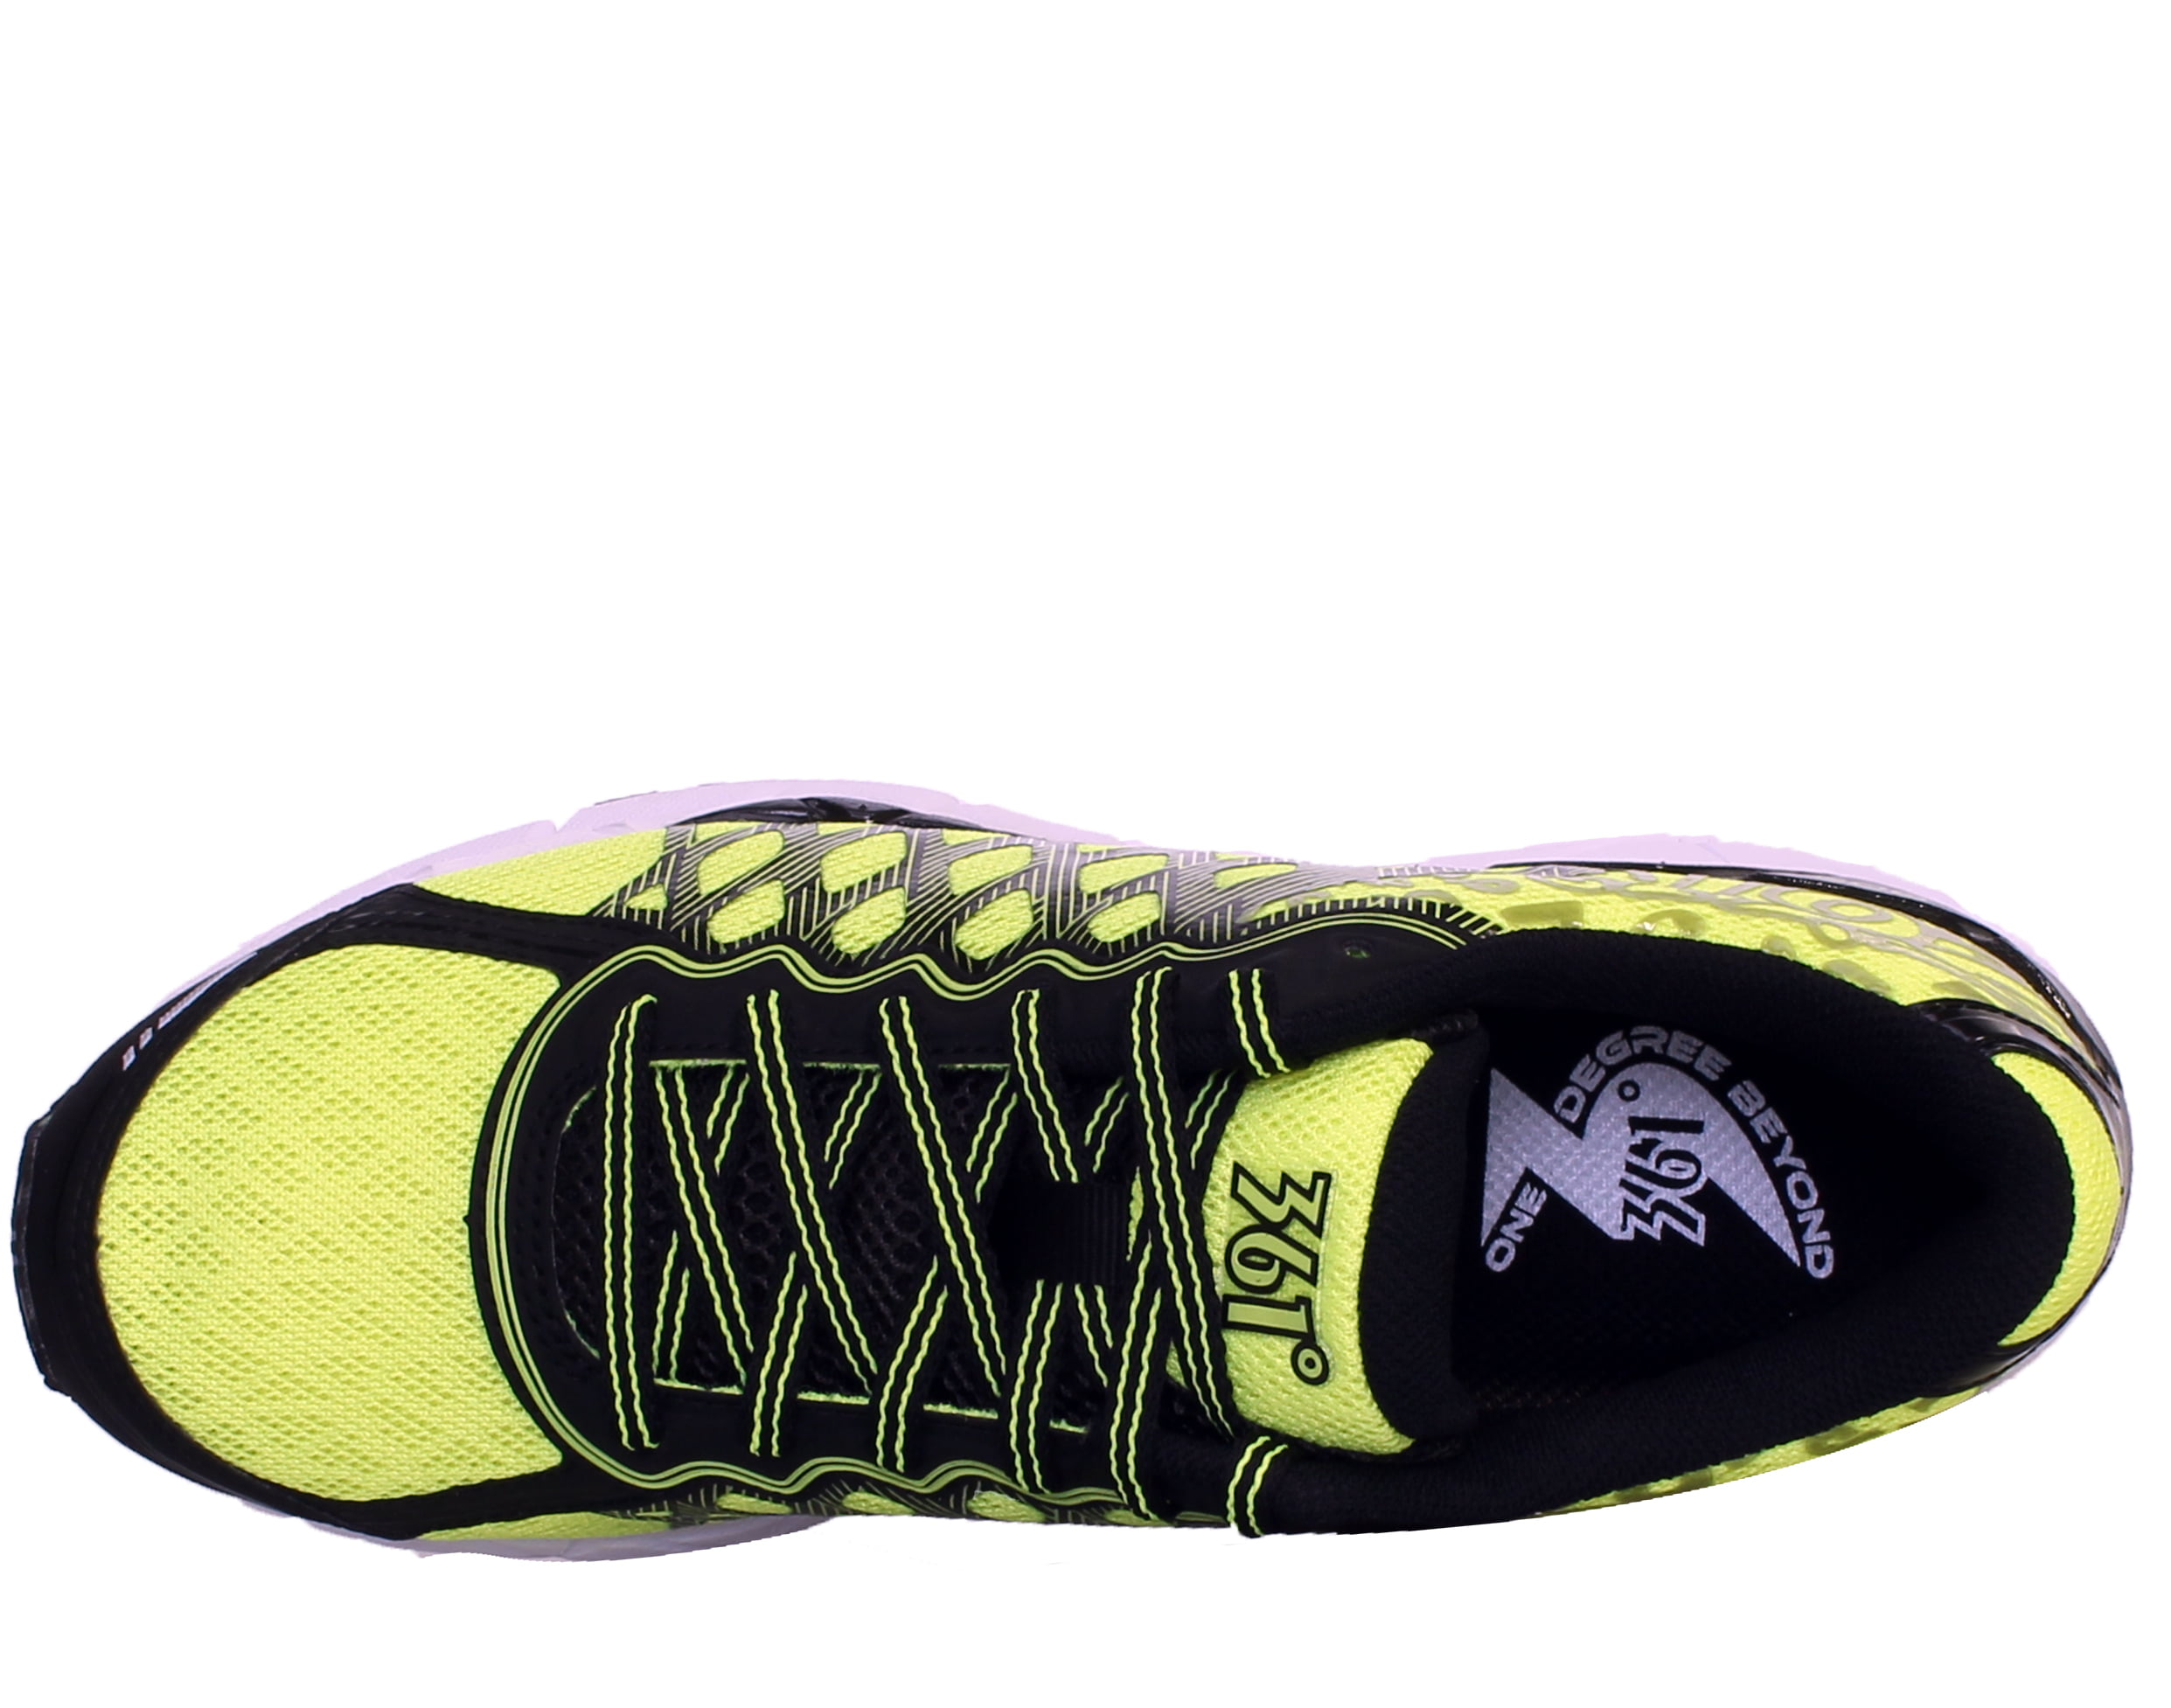 361 KgM2 Black/Flash Yellow Men's Running Shoes 101610114-1038